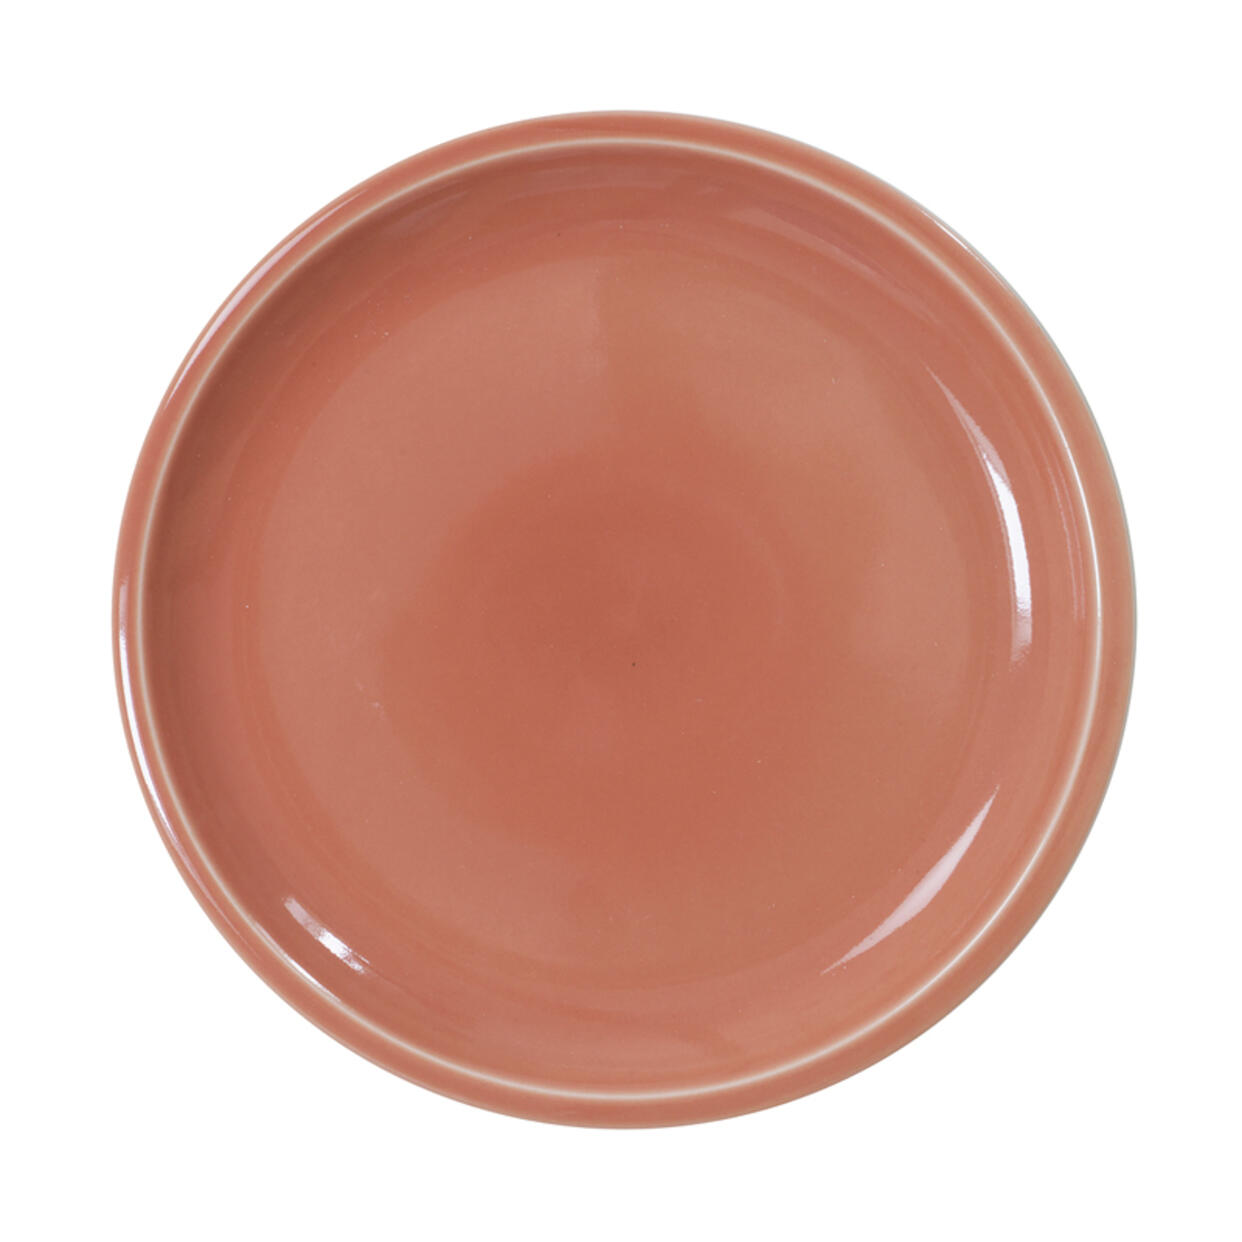 Plate XL Cantine terre cuite, ceramic plate, buy online, jars céramistes